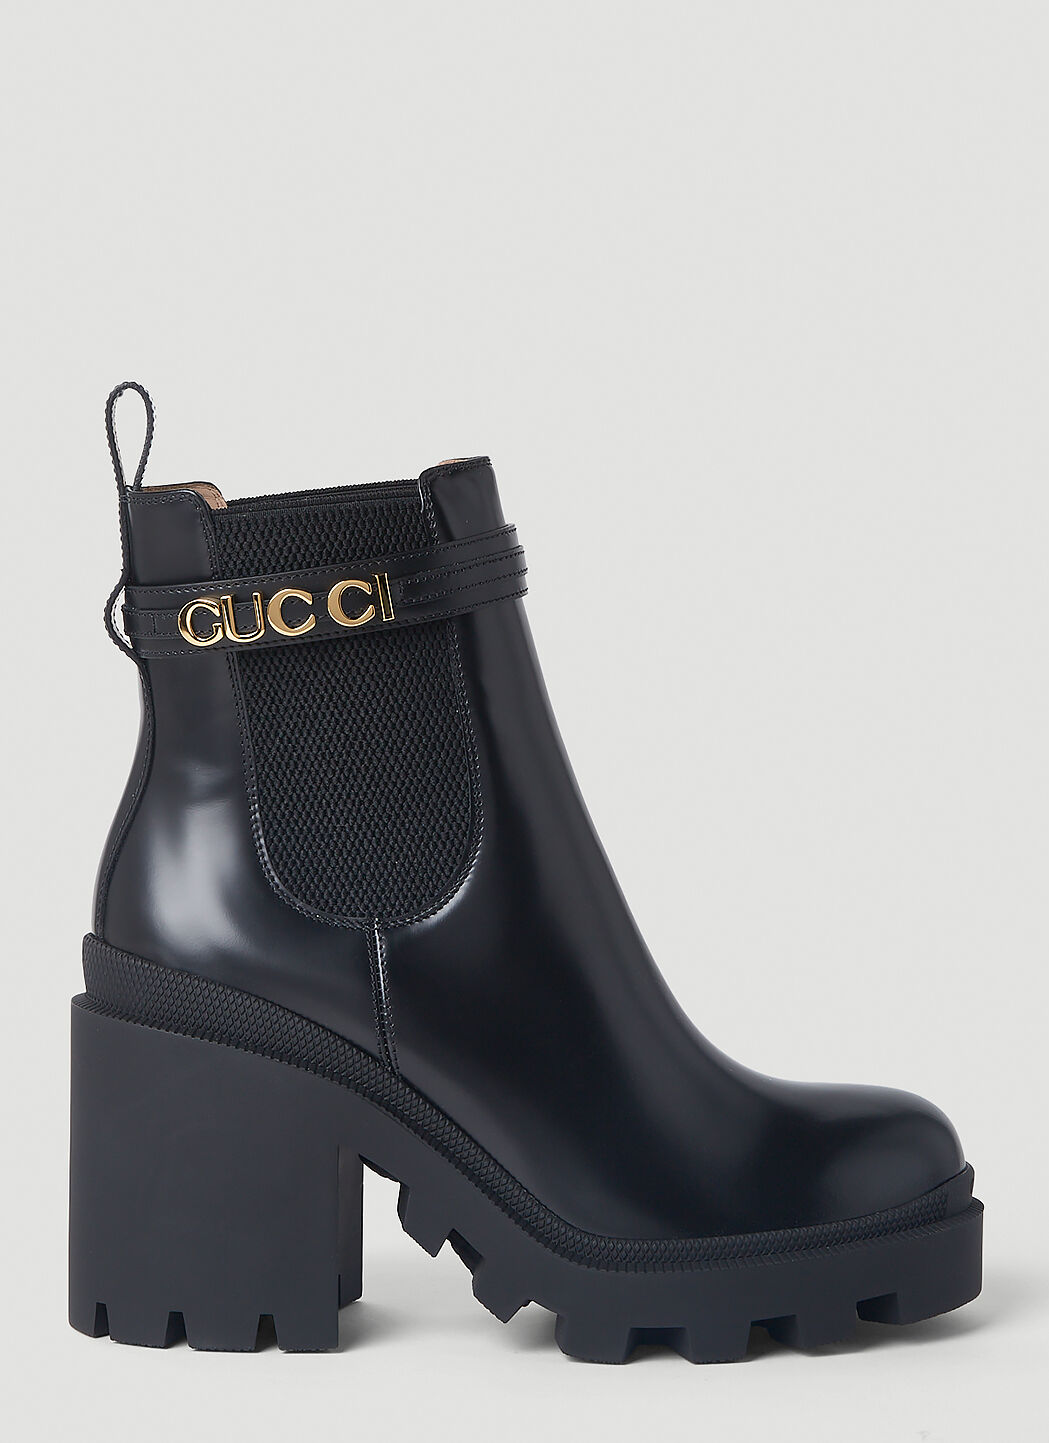 Gucci Trip Heeled Boots in Black | LN-CC